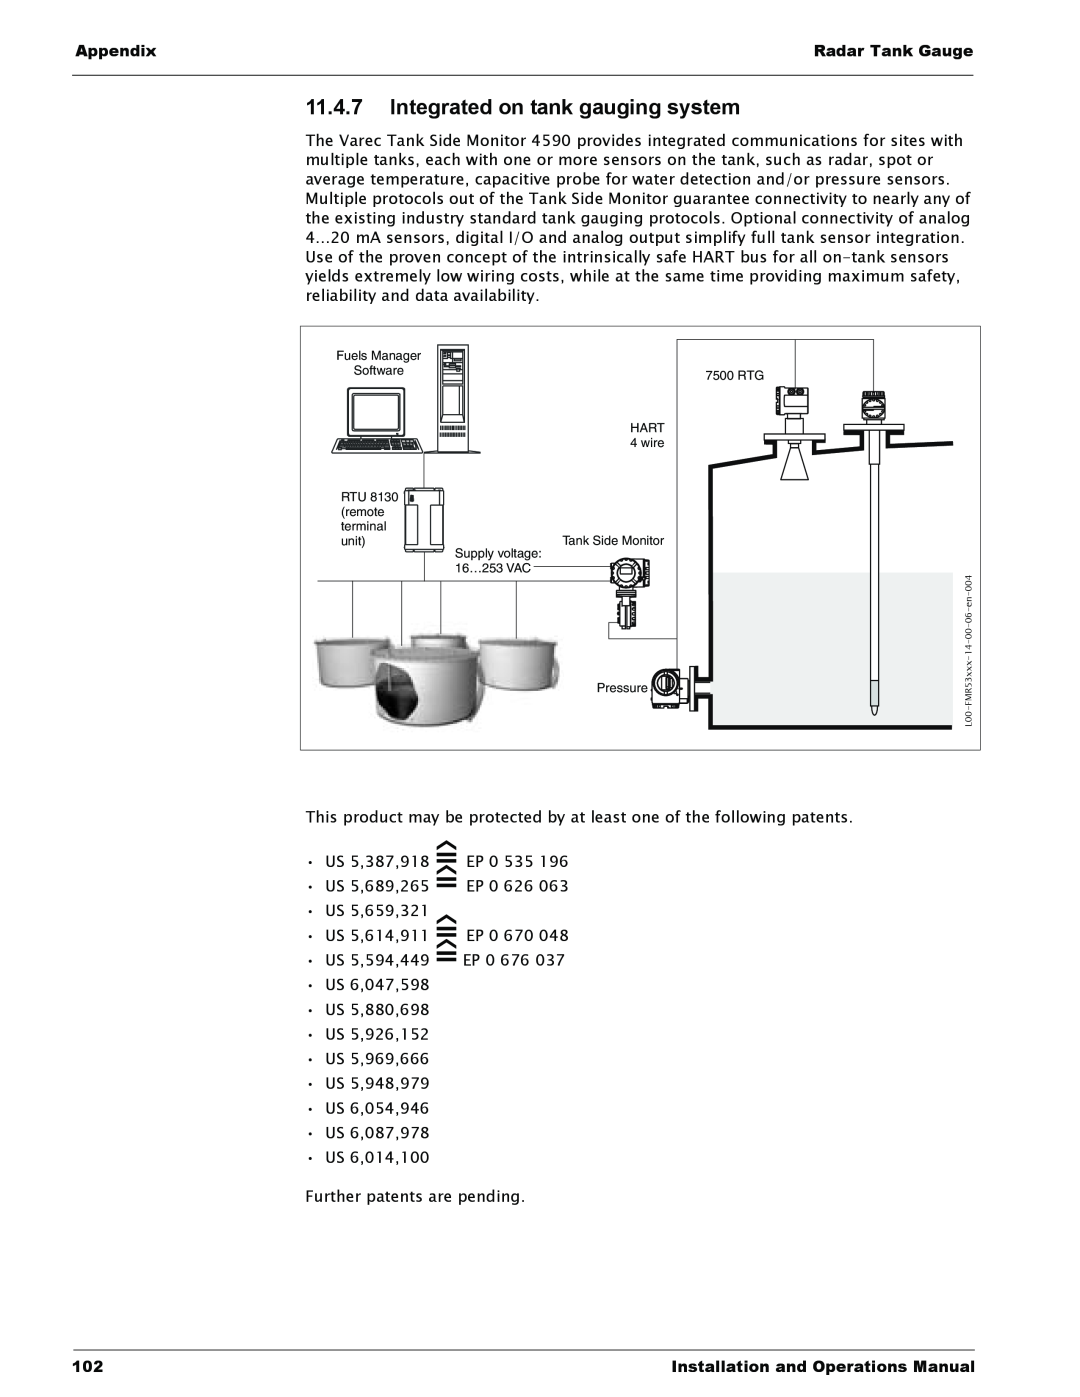 Lightning Audio 7532 manual 11.4.7Integrated on tank gauging system, Appendix, Radar Tank Gauge 